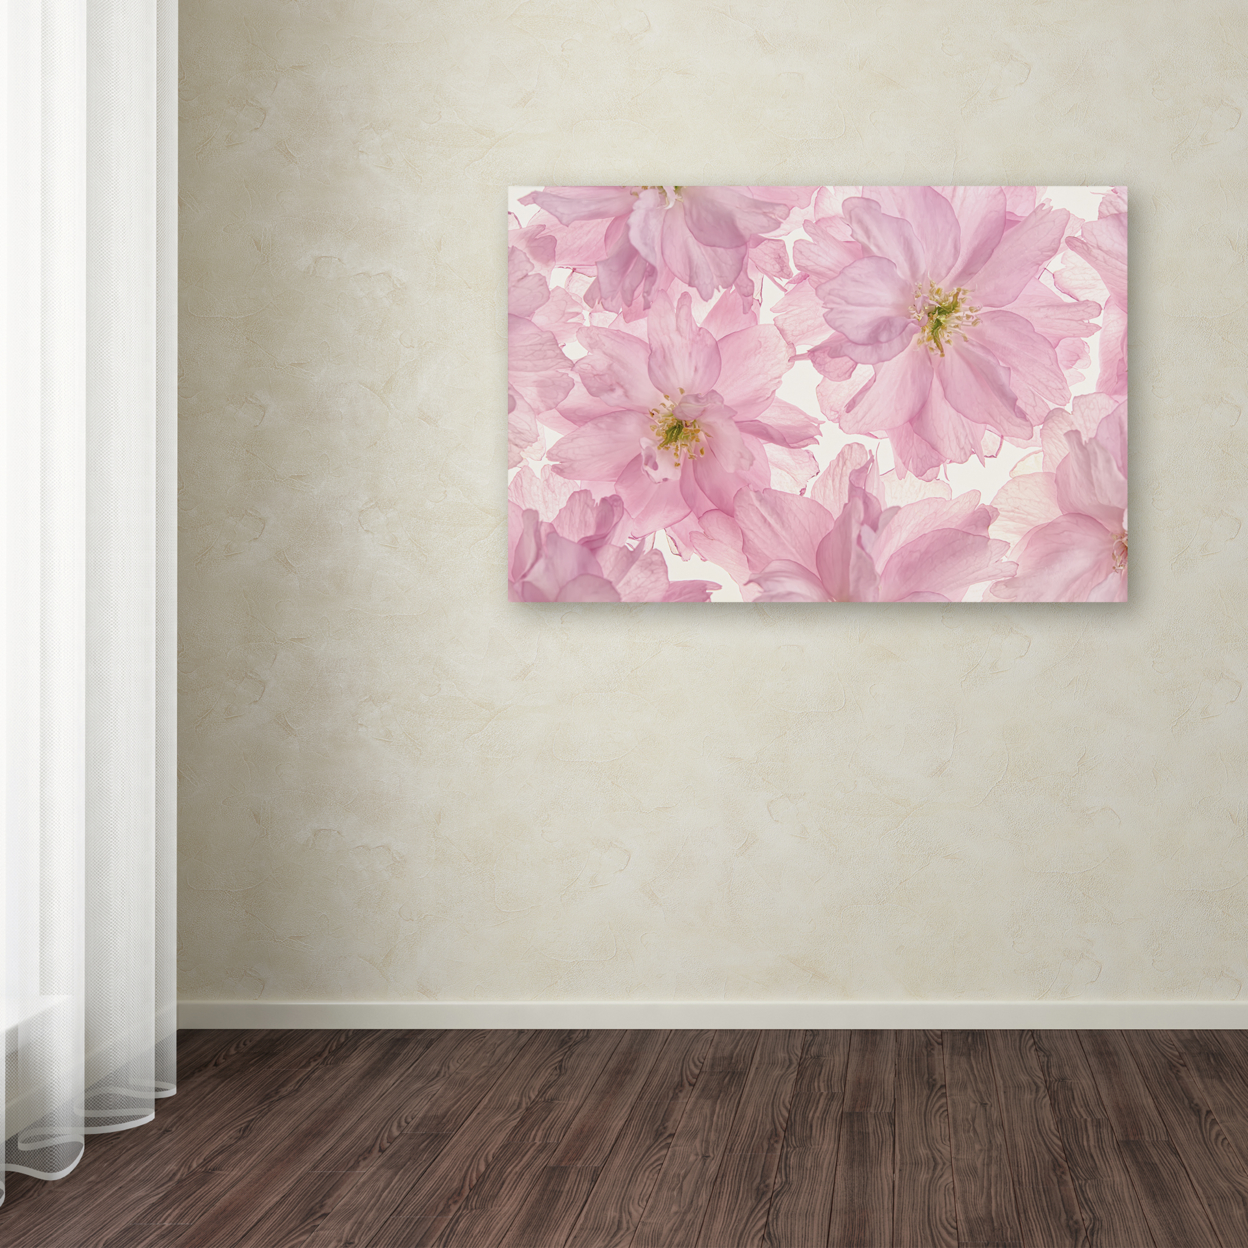 Cora Niele 'Pink Cherry Blossom' Canvas Art 16 X 24